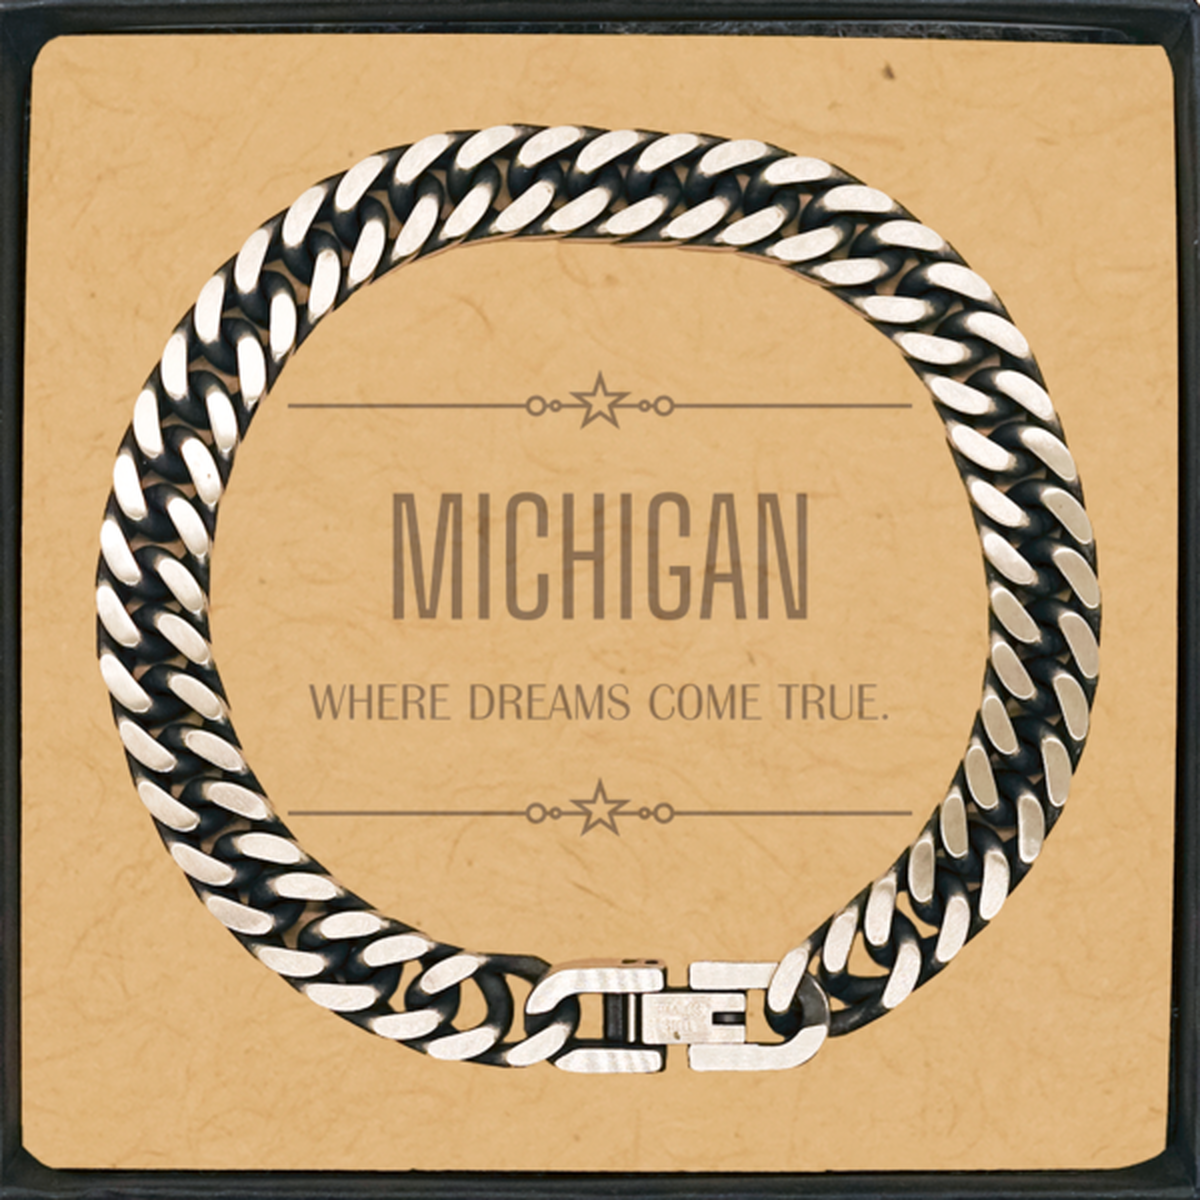 Love Michigan State Cuban Link Chain Bracelet, Michigan Where dreams come true, Birthday Inspirational Gifts For Michigan Men, Women, Friends